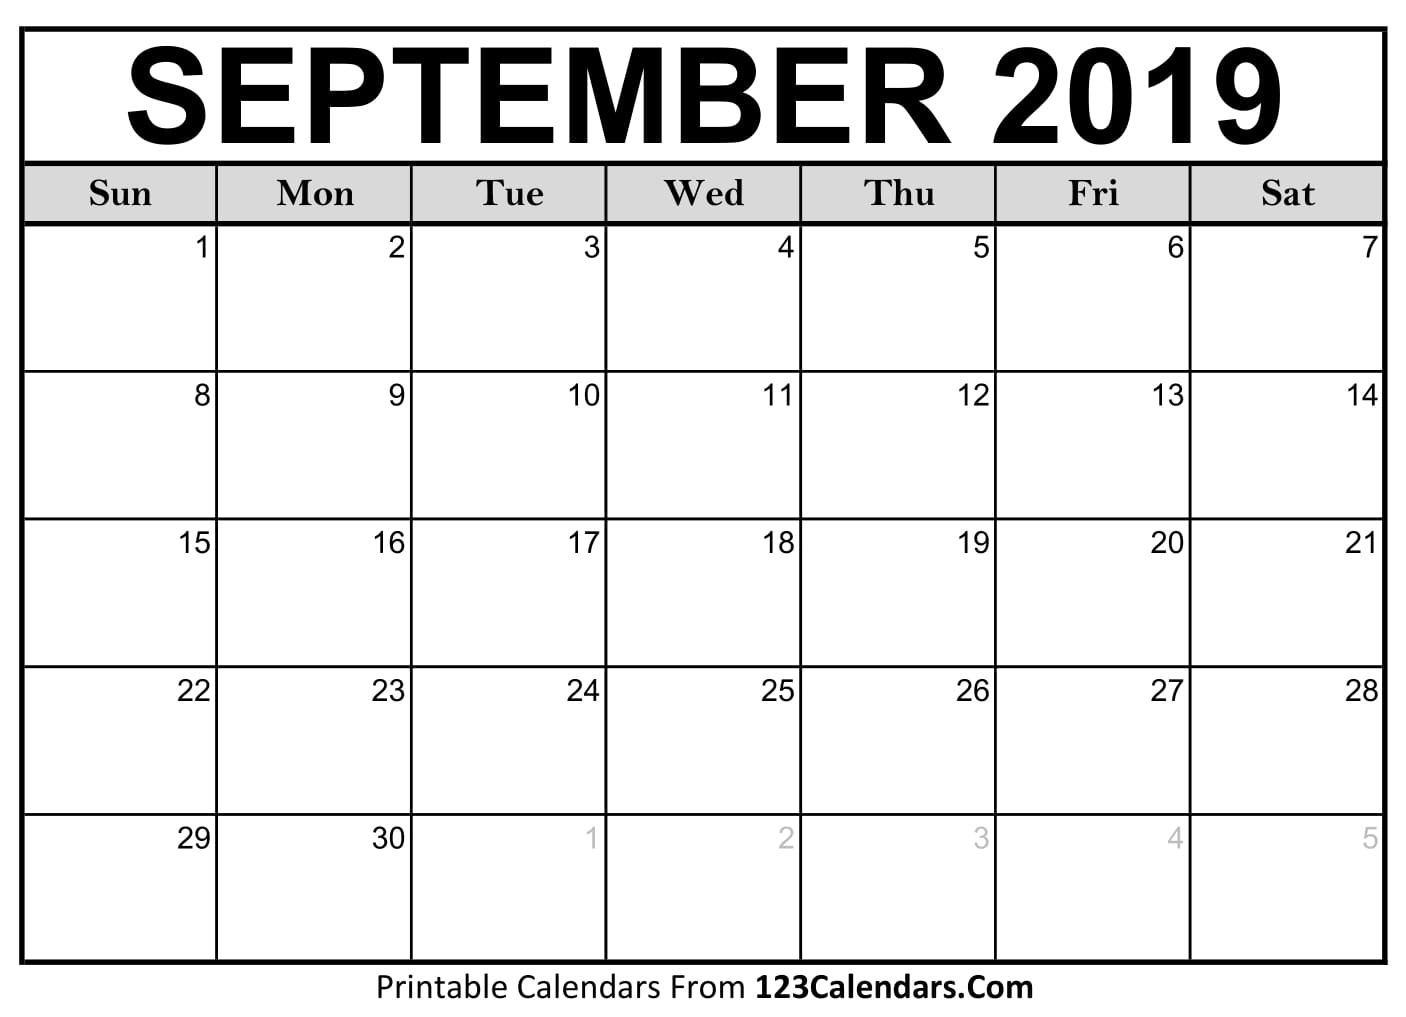 September 2019 Printable Calendar | 123Calendars-Blank Calendar Sep 2020 Thru Dec 2020